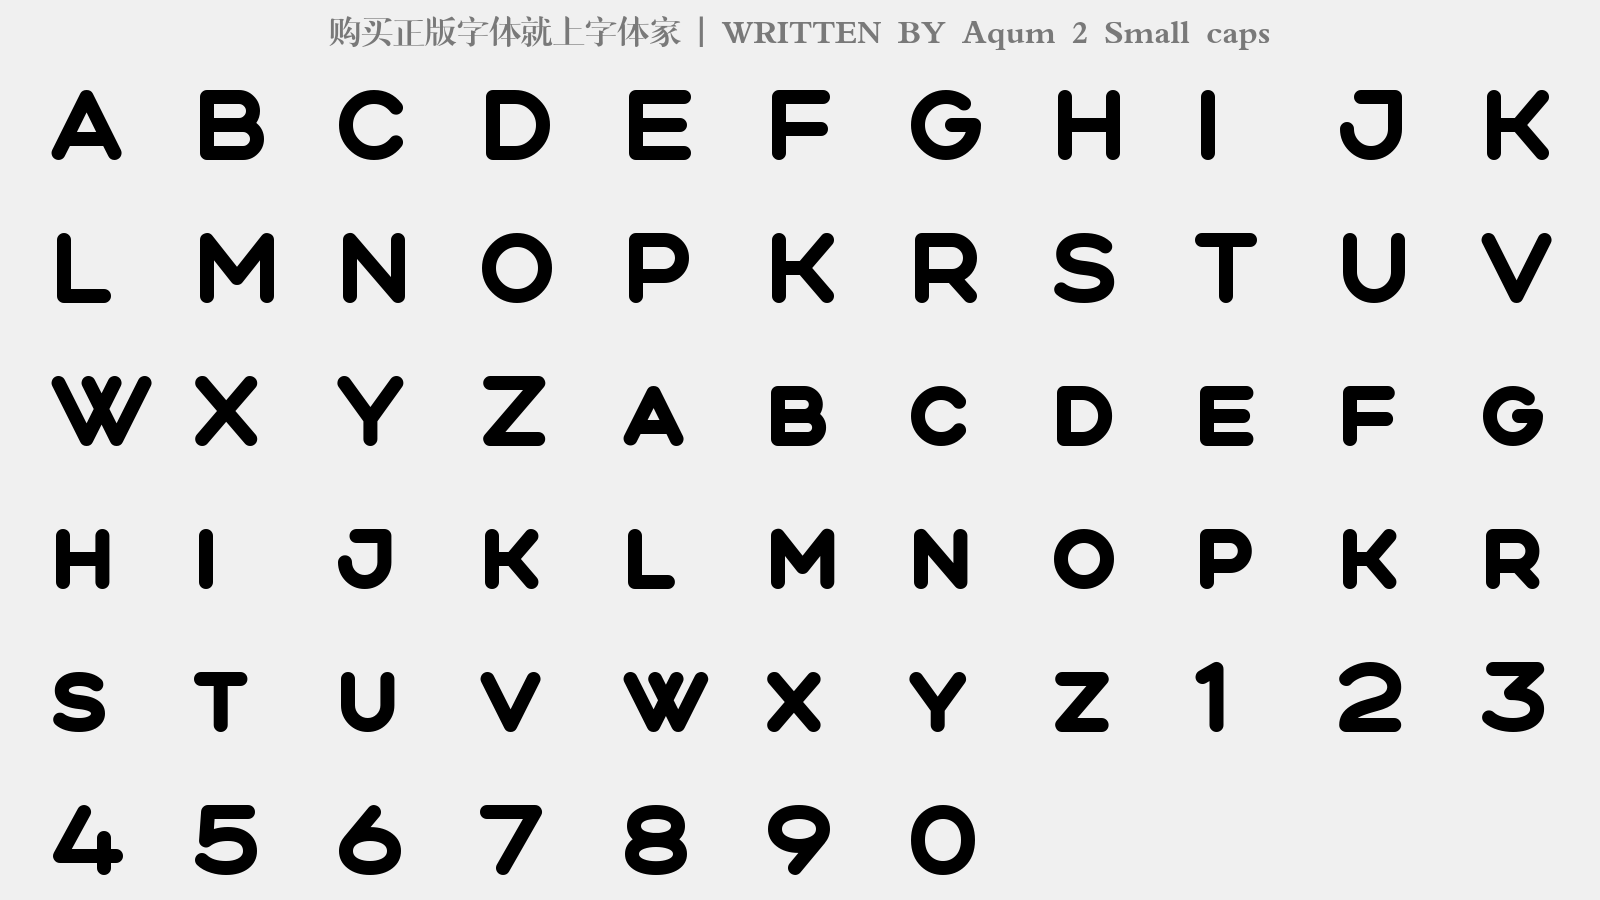 Aqum 2 Small caps - 大写字母/小写字母/数字